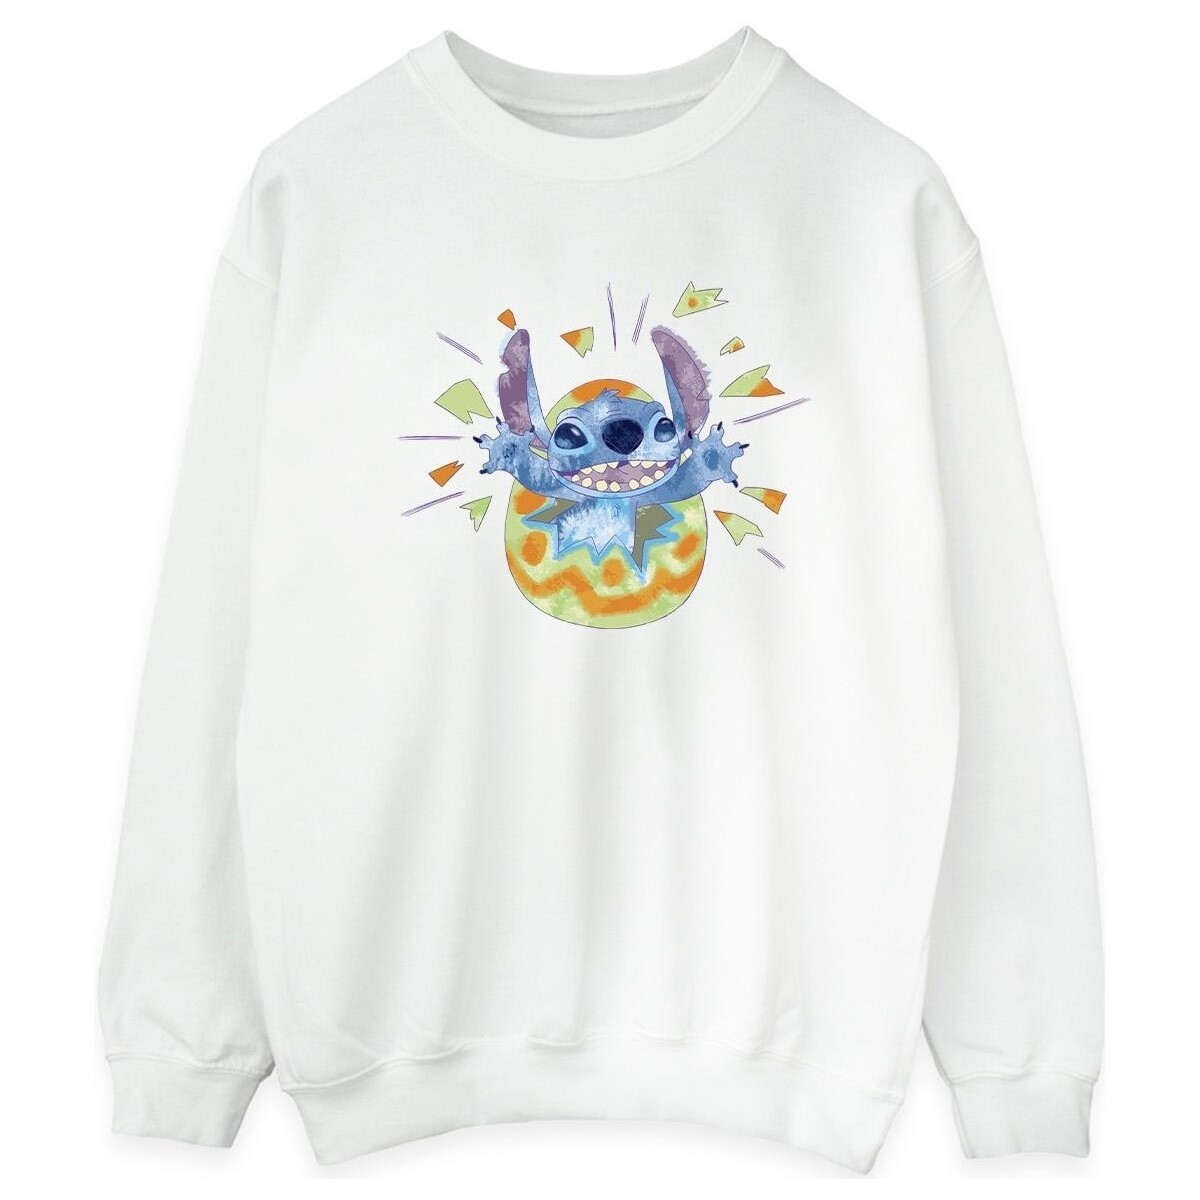 Vêtements Femme Sweats Disney Lilo & Stitch Cracking Egg Blanc